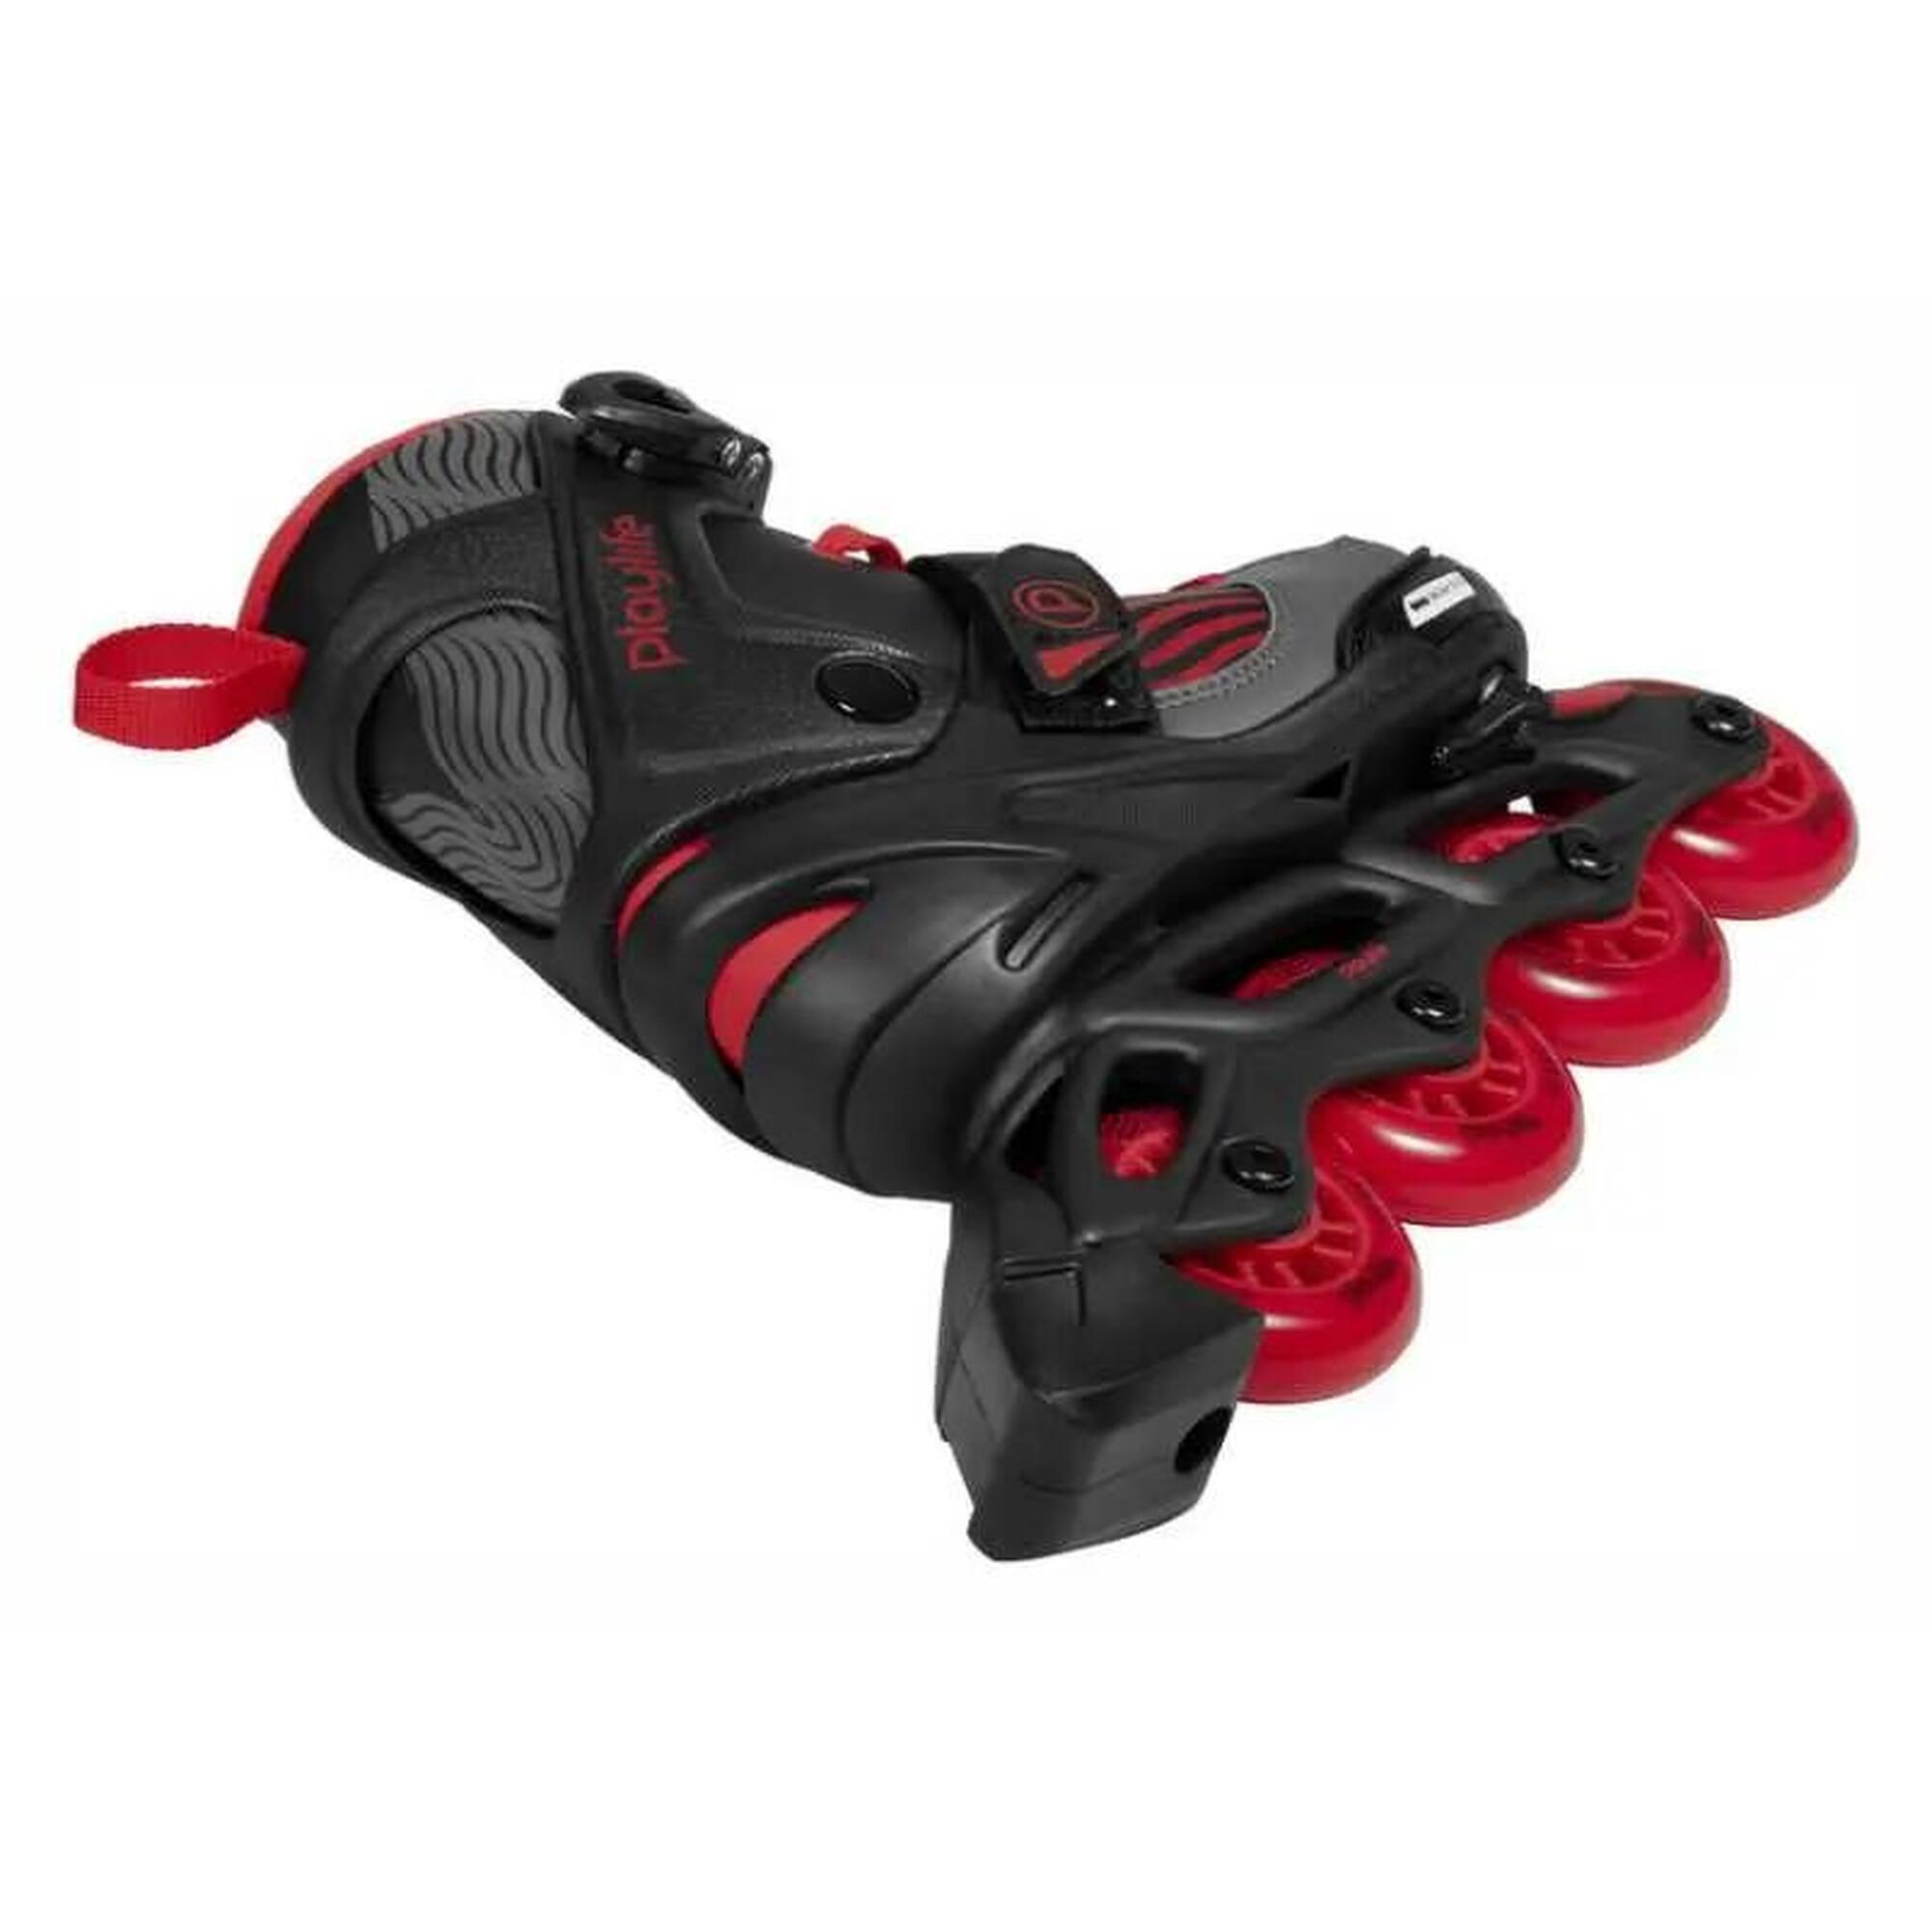 Playlife inline skates Dark Breeze 82A zwart/rood